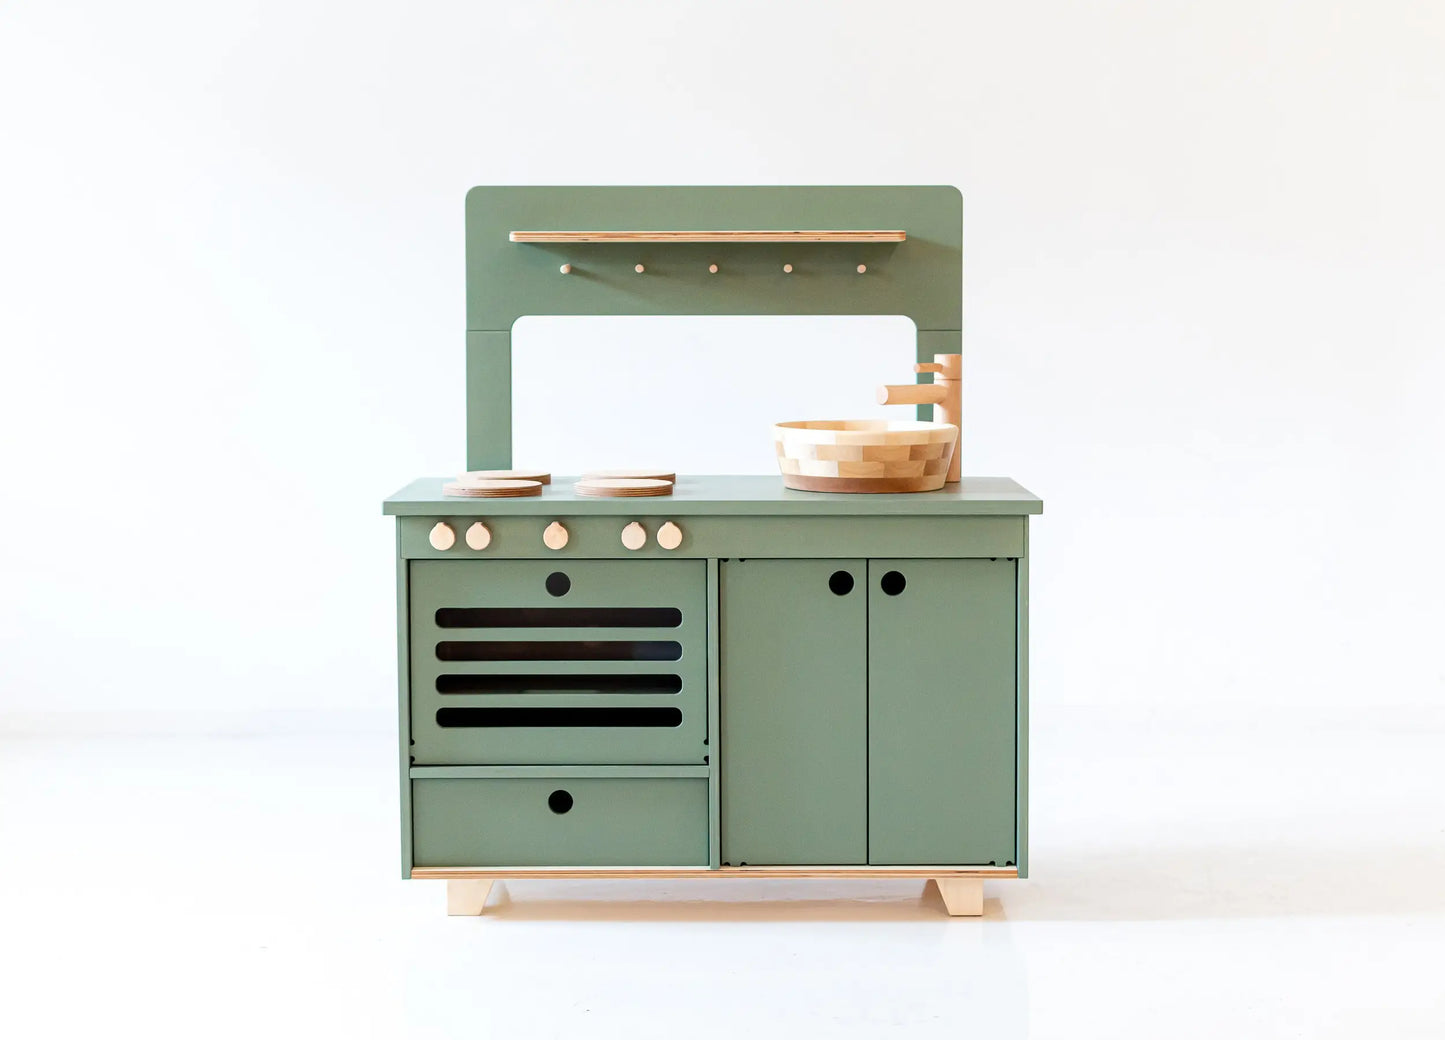 ZOE Dusty Green Wooden Play Kitchen + MIDMINI Plywood Tea Set for FREE